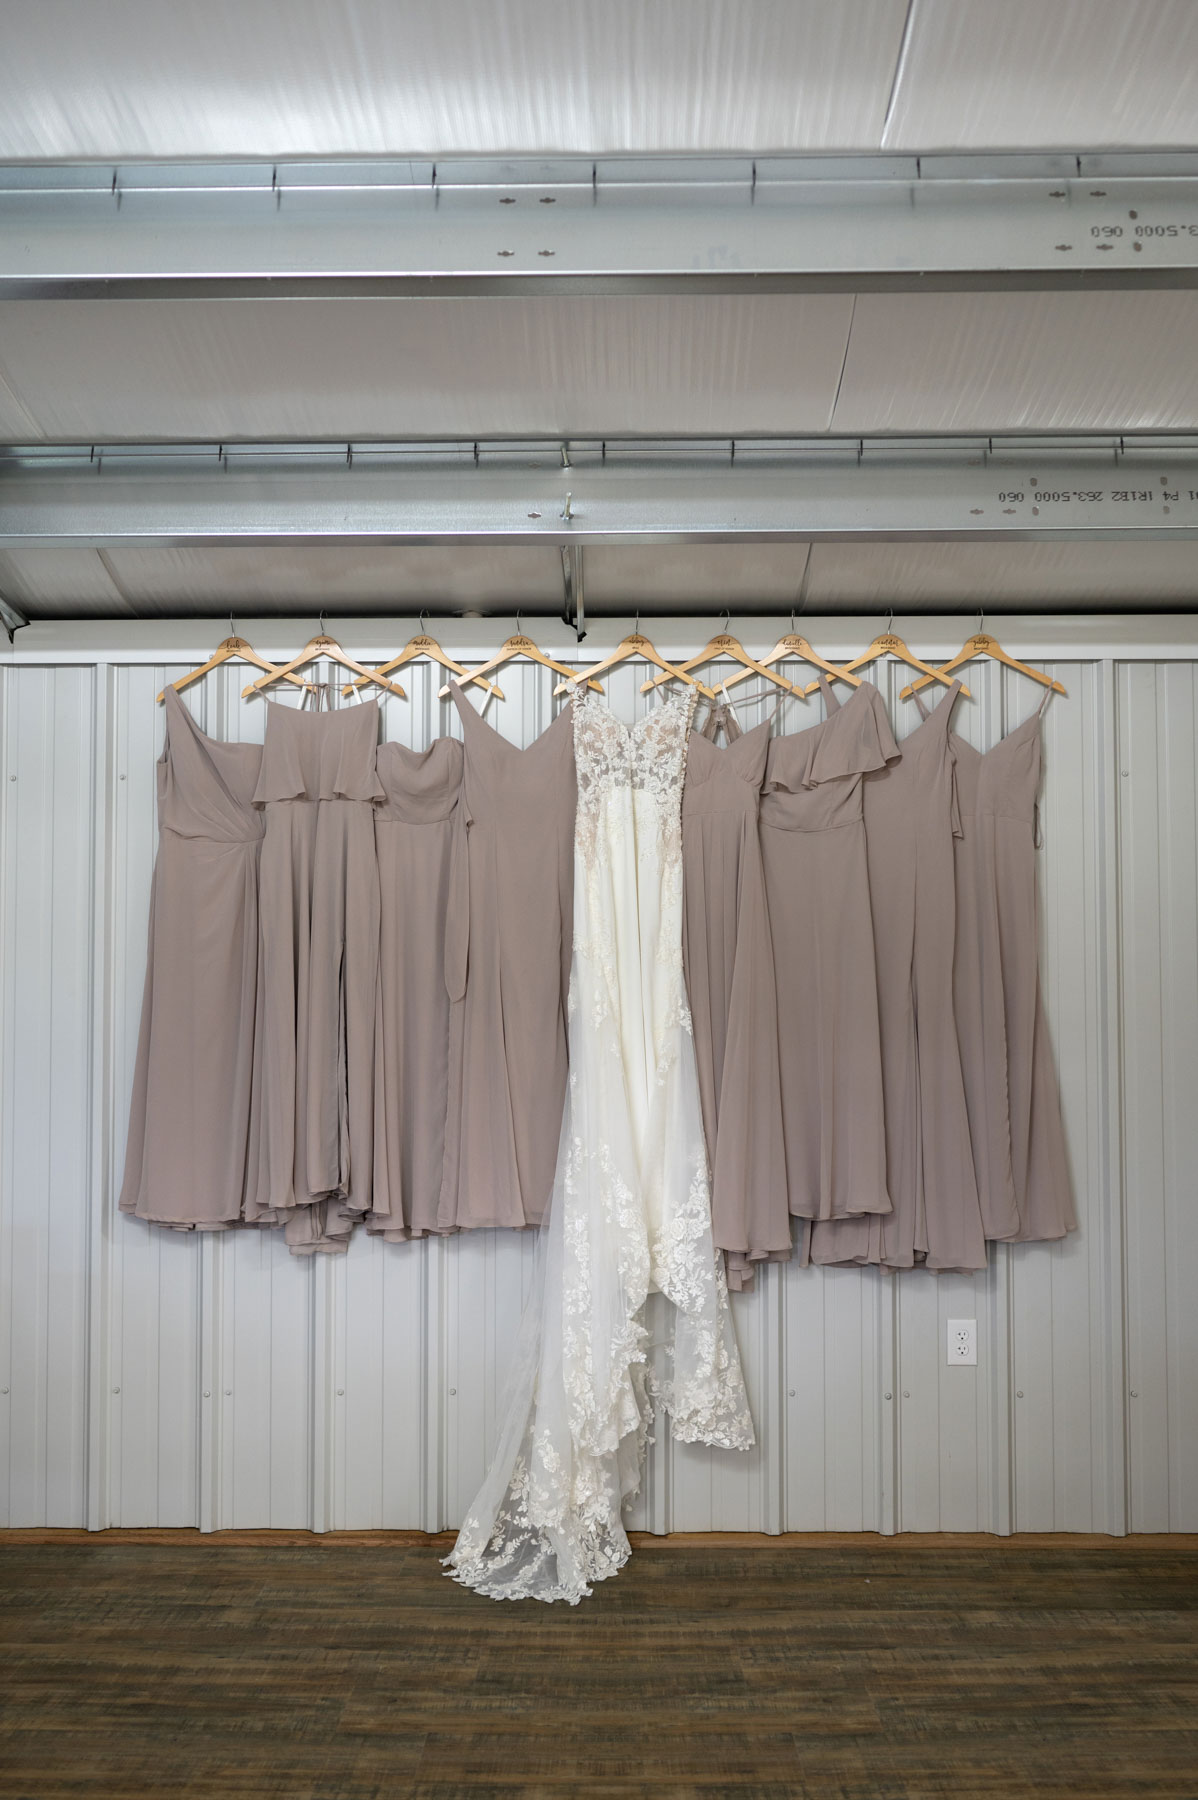 Bridesmaids dresses hanging